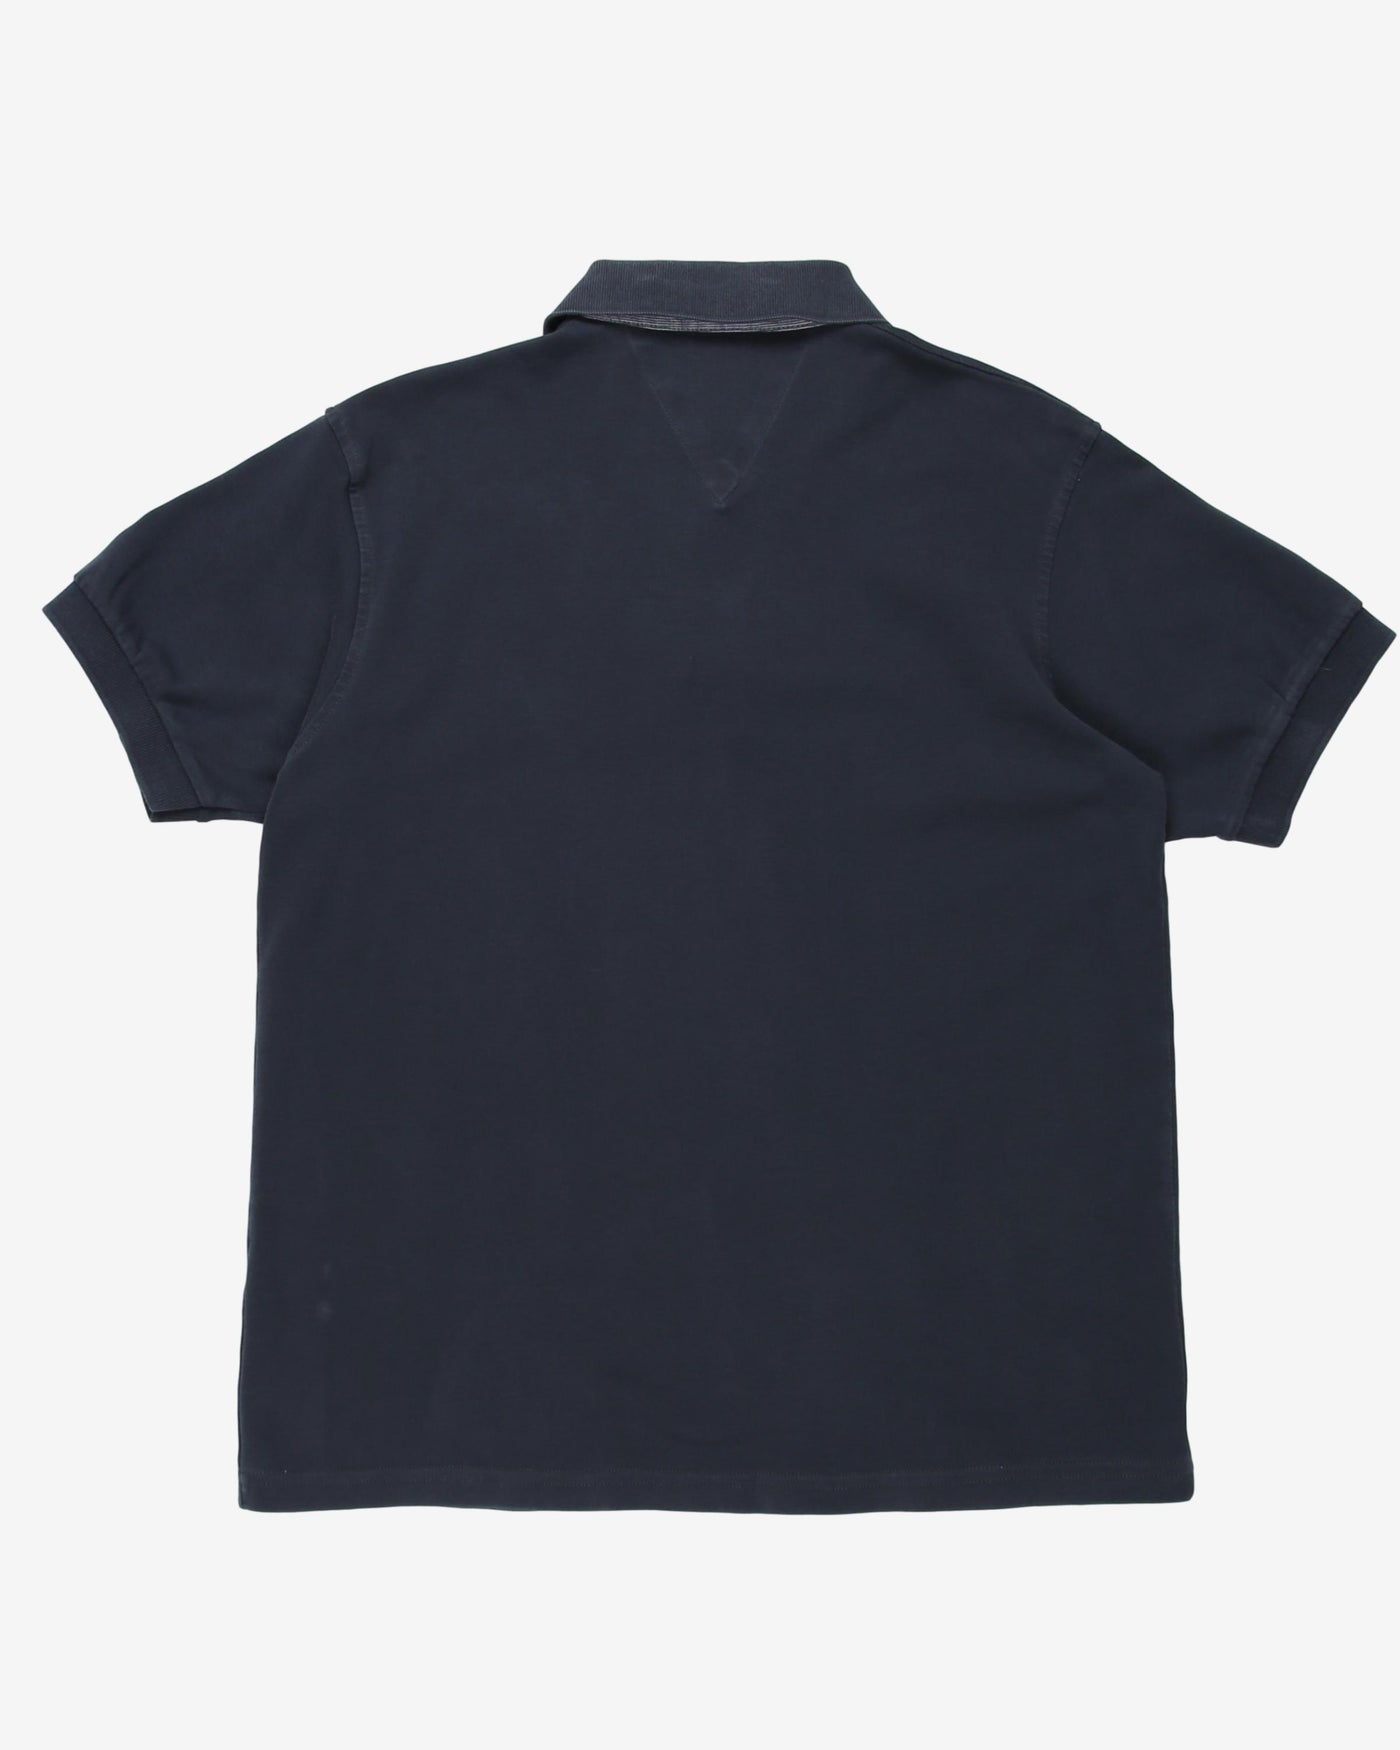 Blue Armani Embroidered Logo Polo Shirt - L